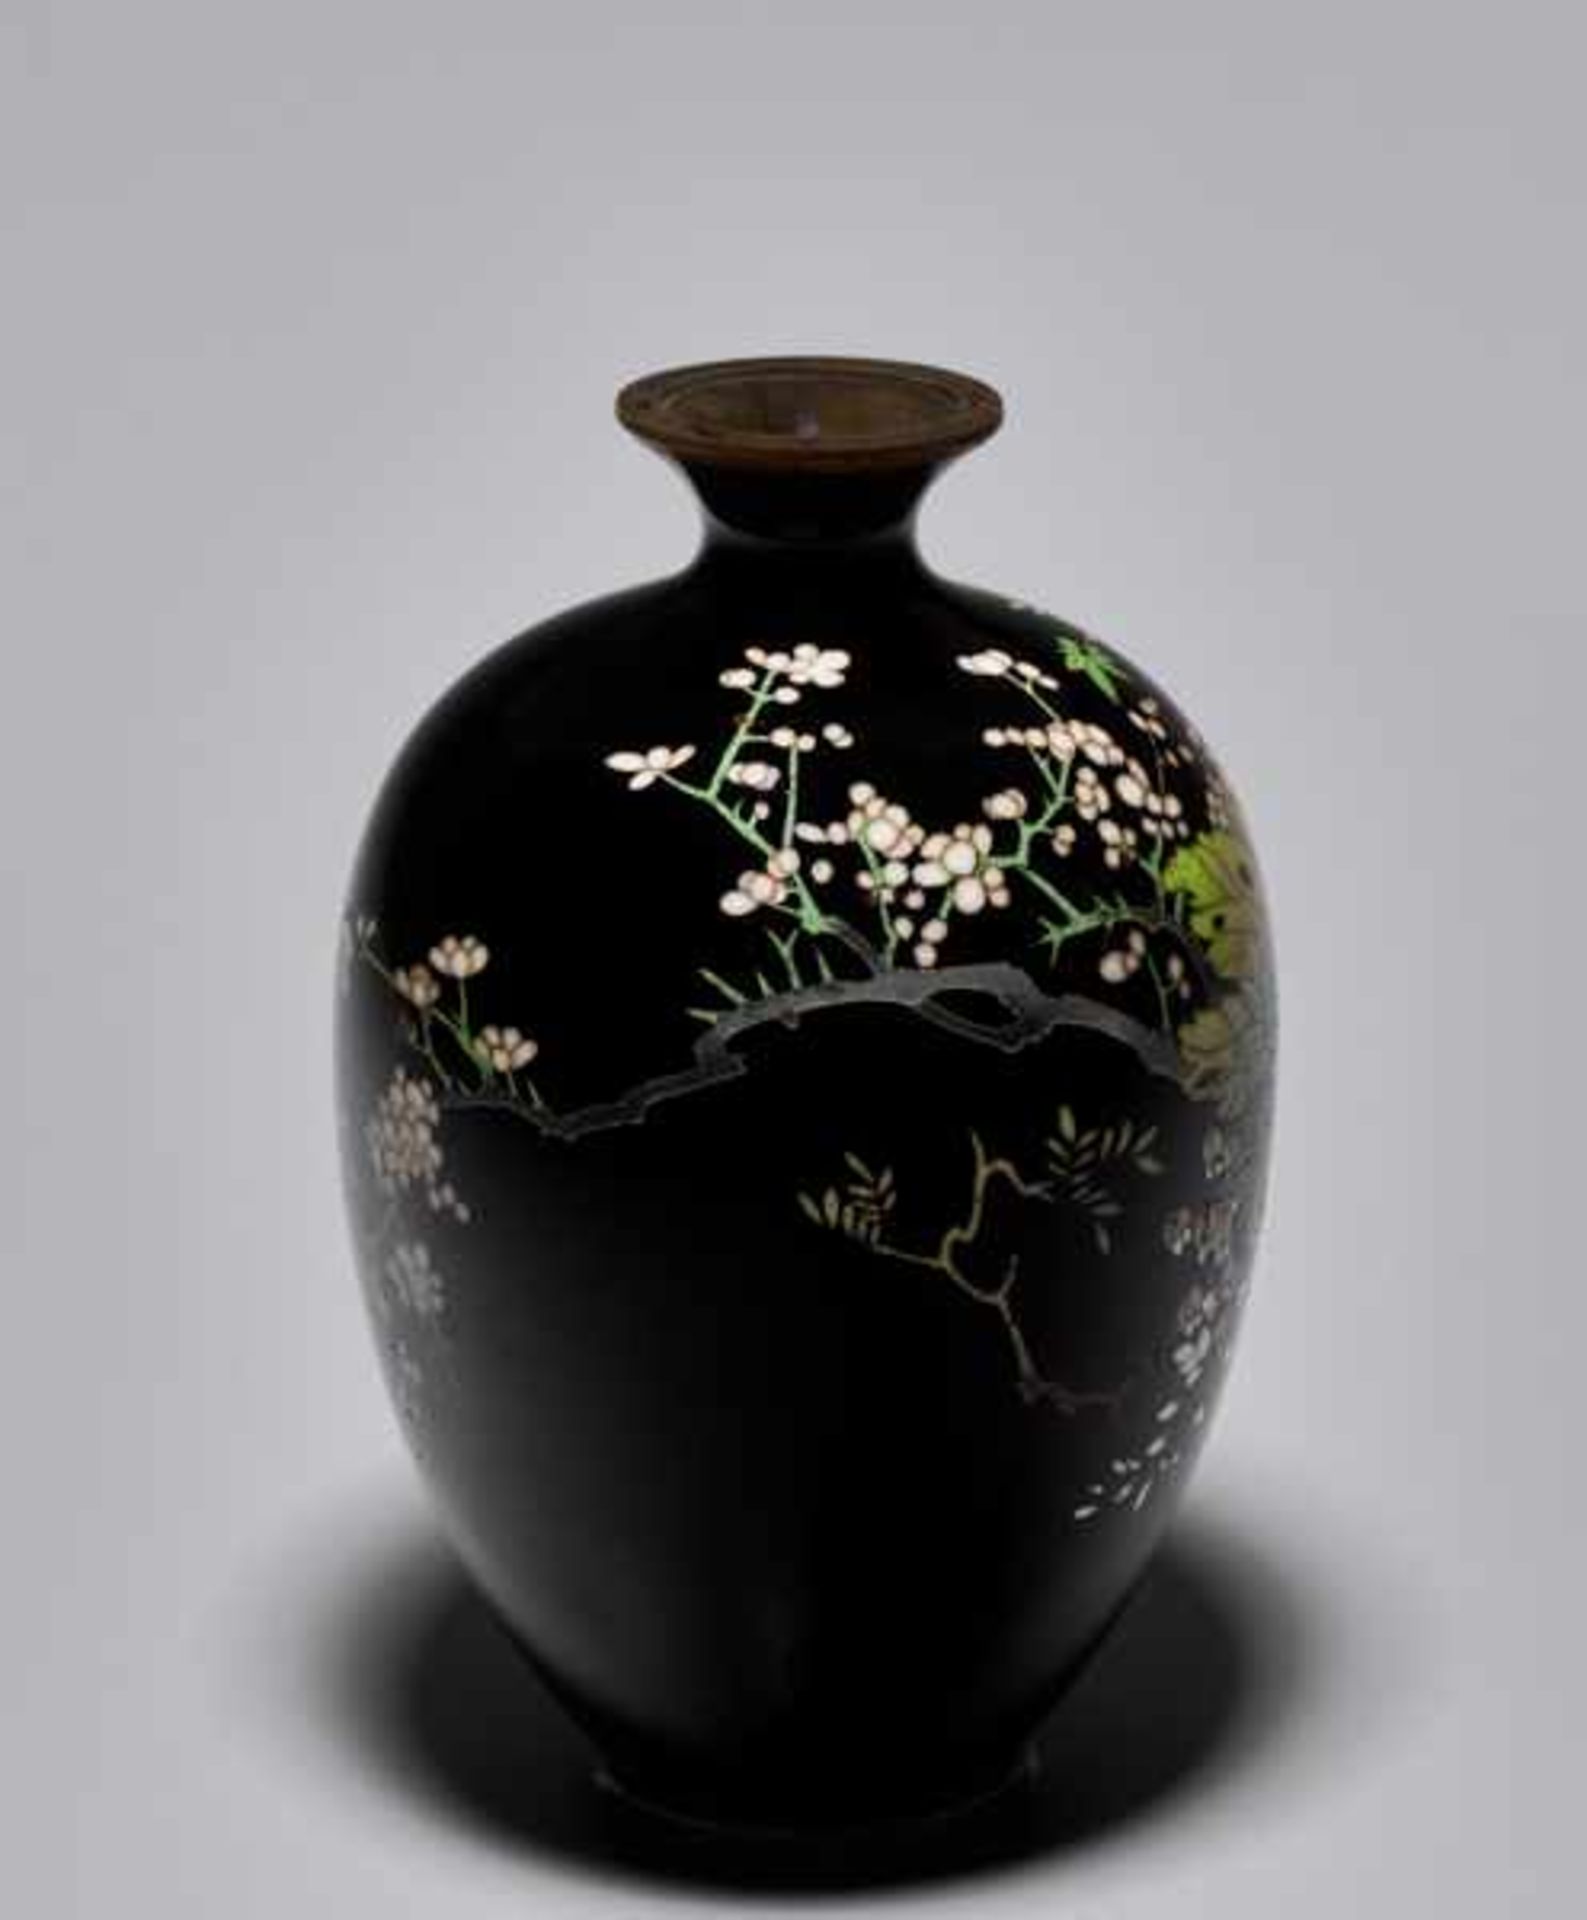 A PAIR OF SMALL CLOISONNÉ VASES WITH PLUM BLOSSOMS Colored enamel cloisonné. Japan, Meiji period - Image 9 of 9